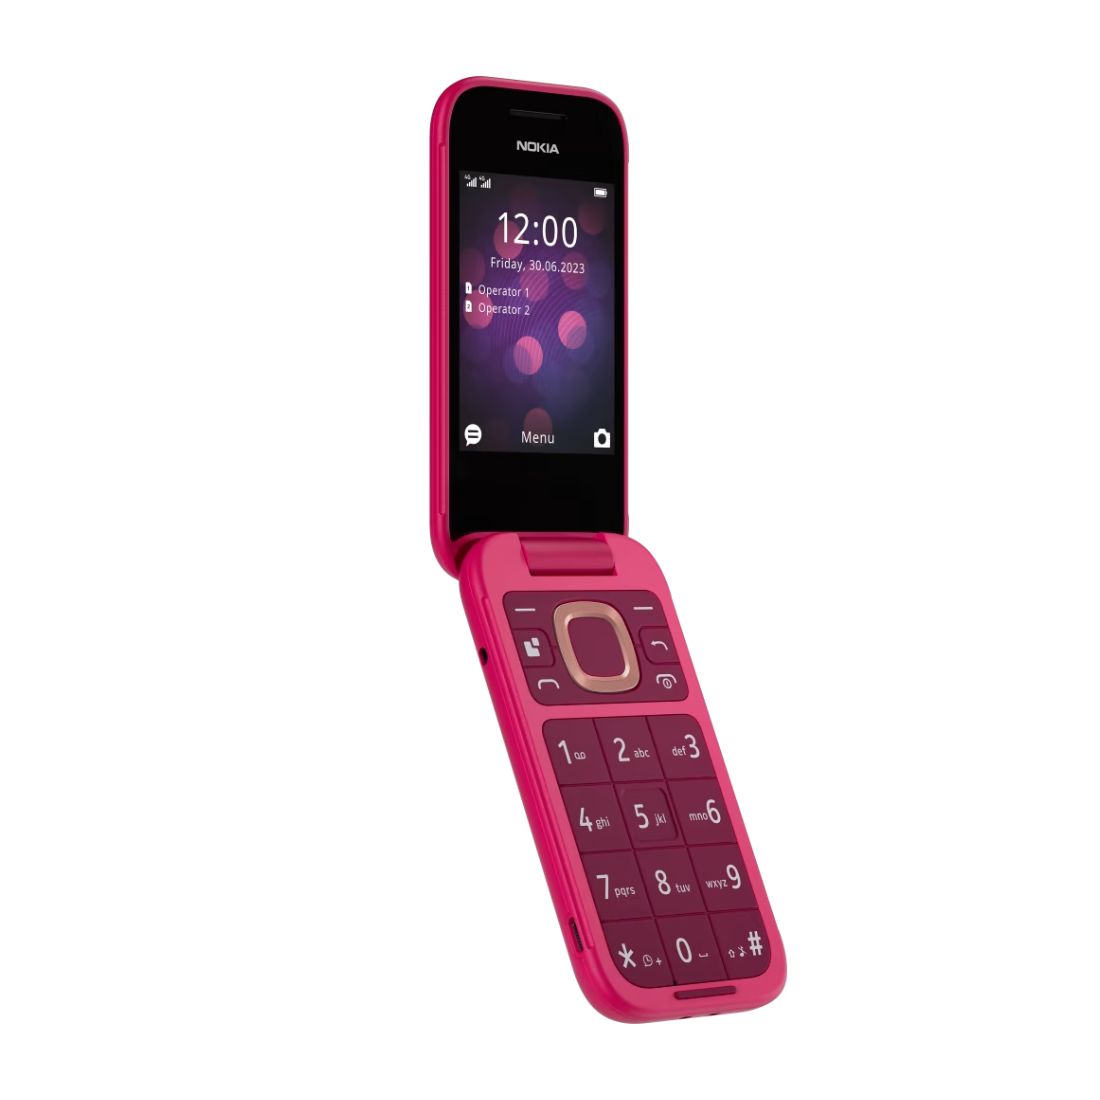 Nokia 2660 Dual SIM 4G FLIP BIG Button Phone Unlocked - Pink